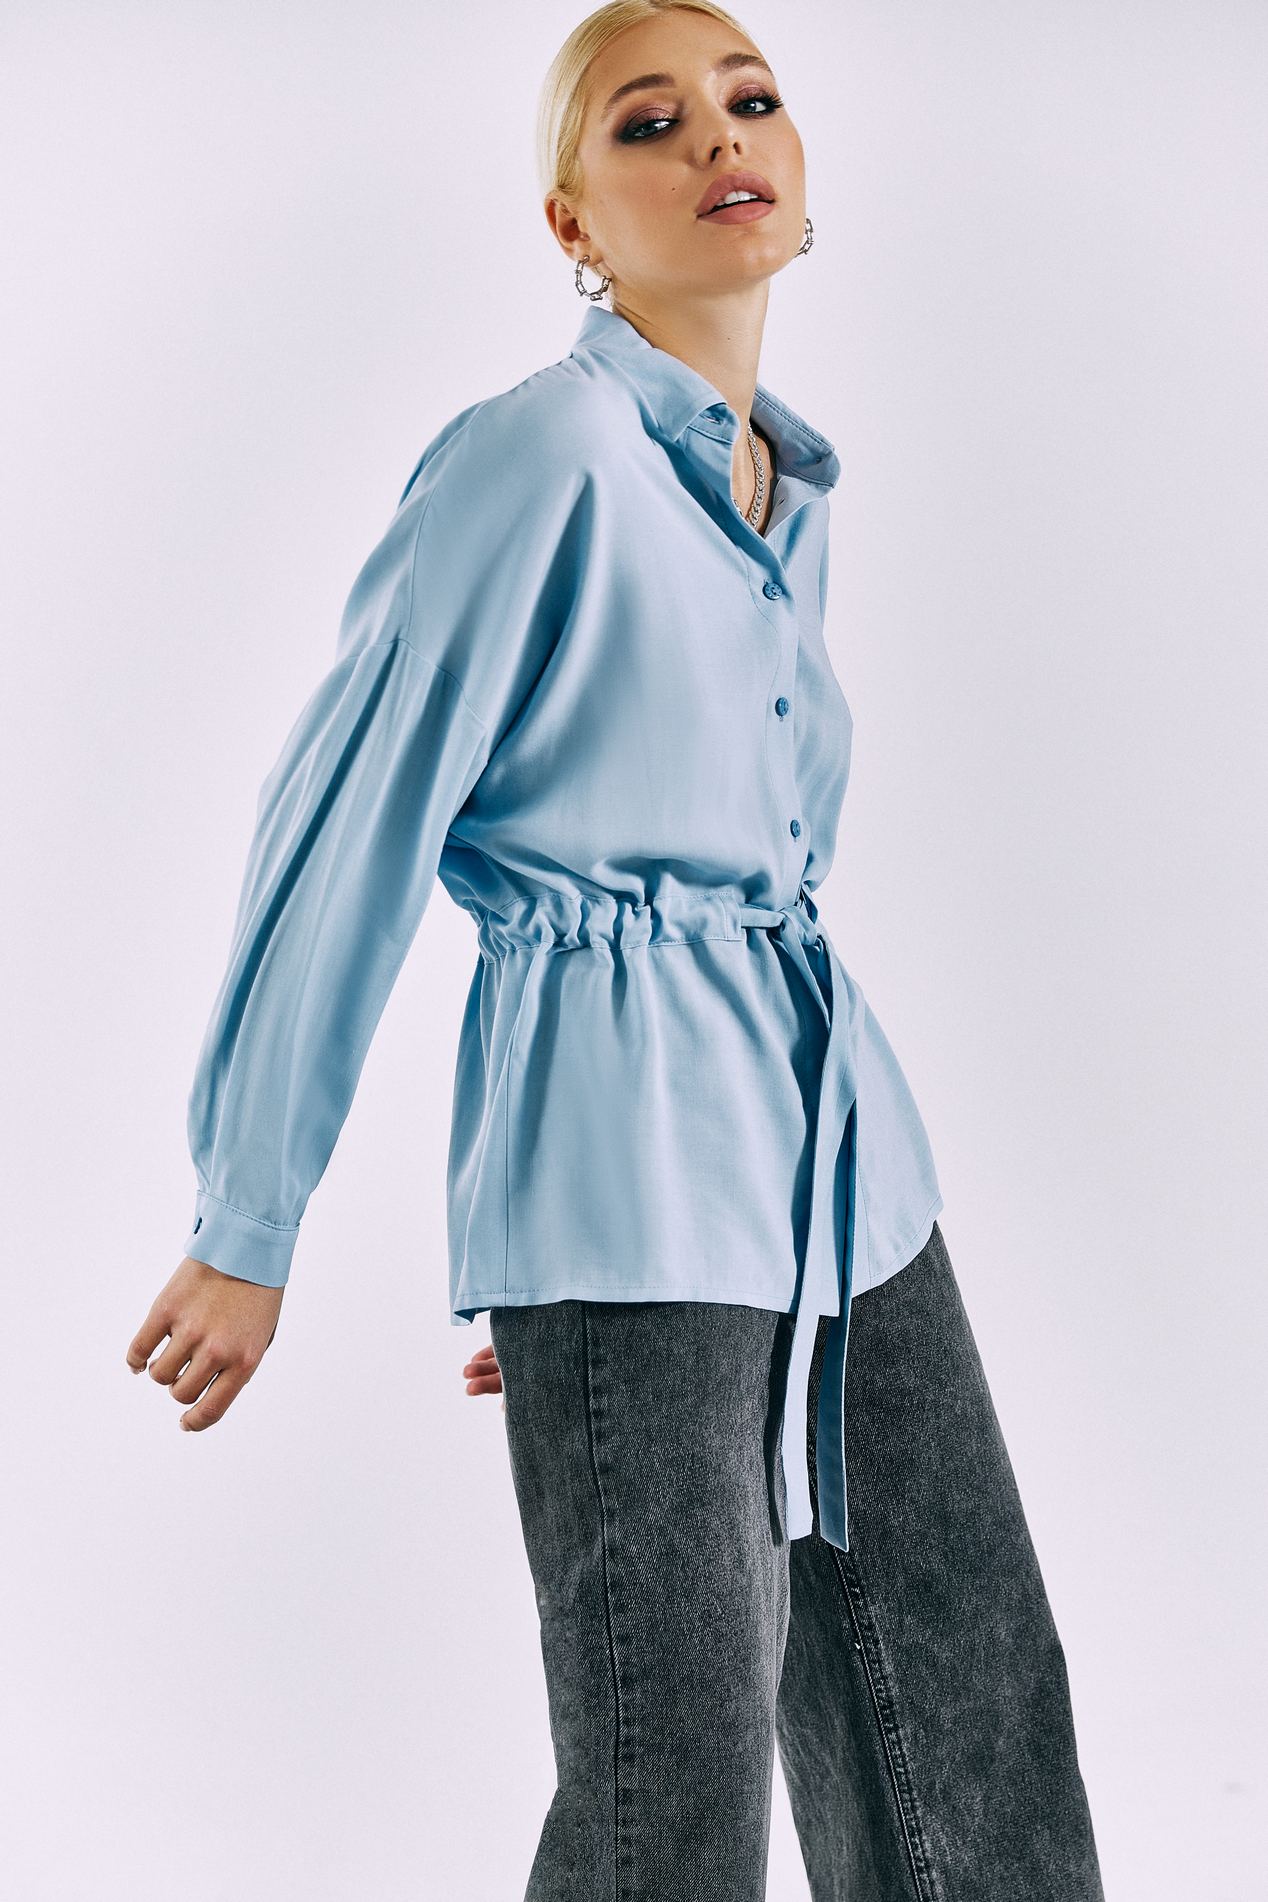 Buy Sky blue blouse with drawstring: blouse, light blue color, staple ...